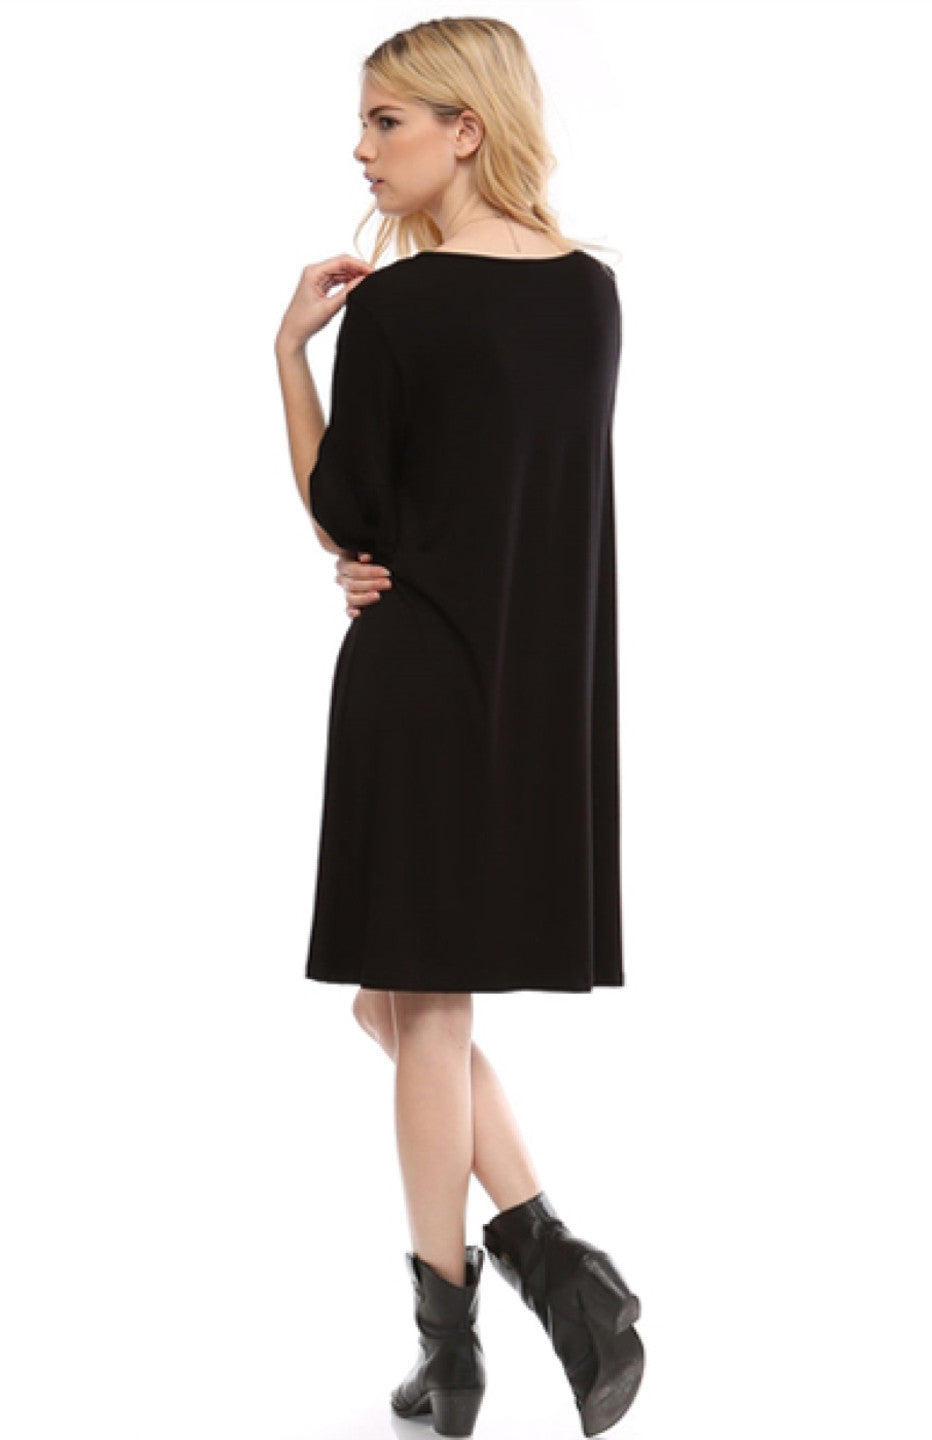 Store – Bell Dress 3/4 Tunic BodiLove Fashion Oversize Sleeve